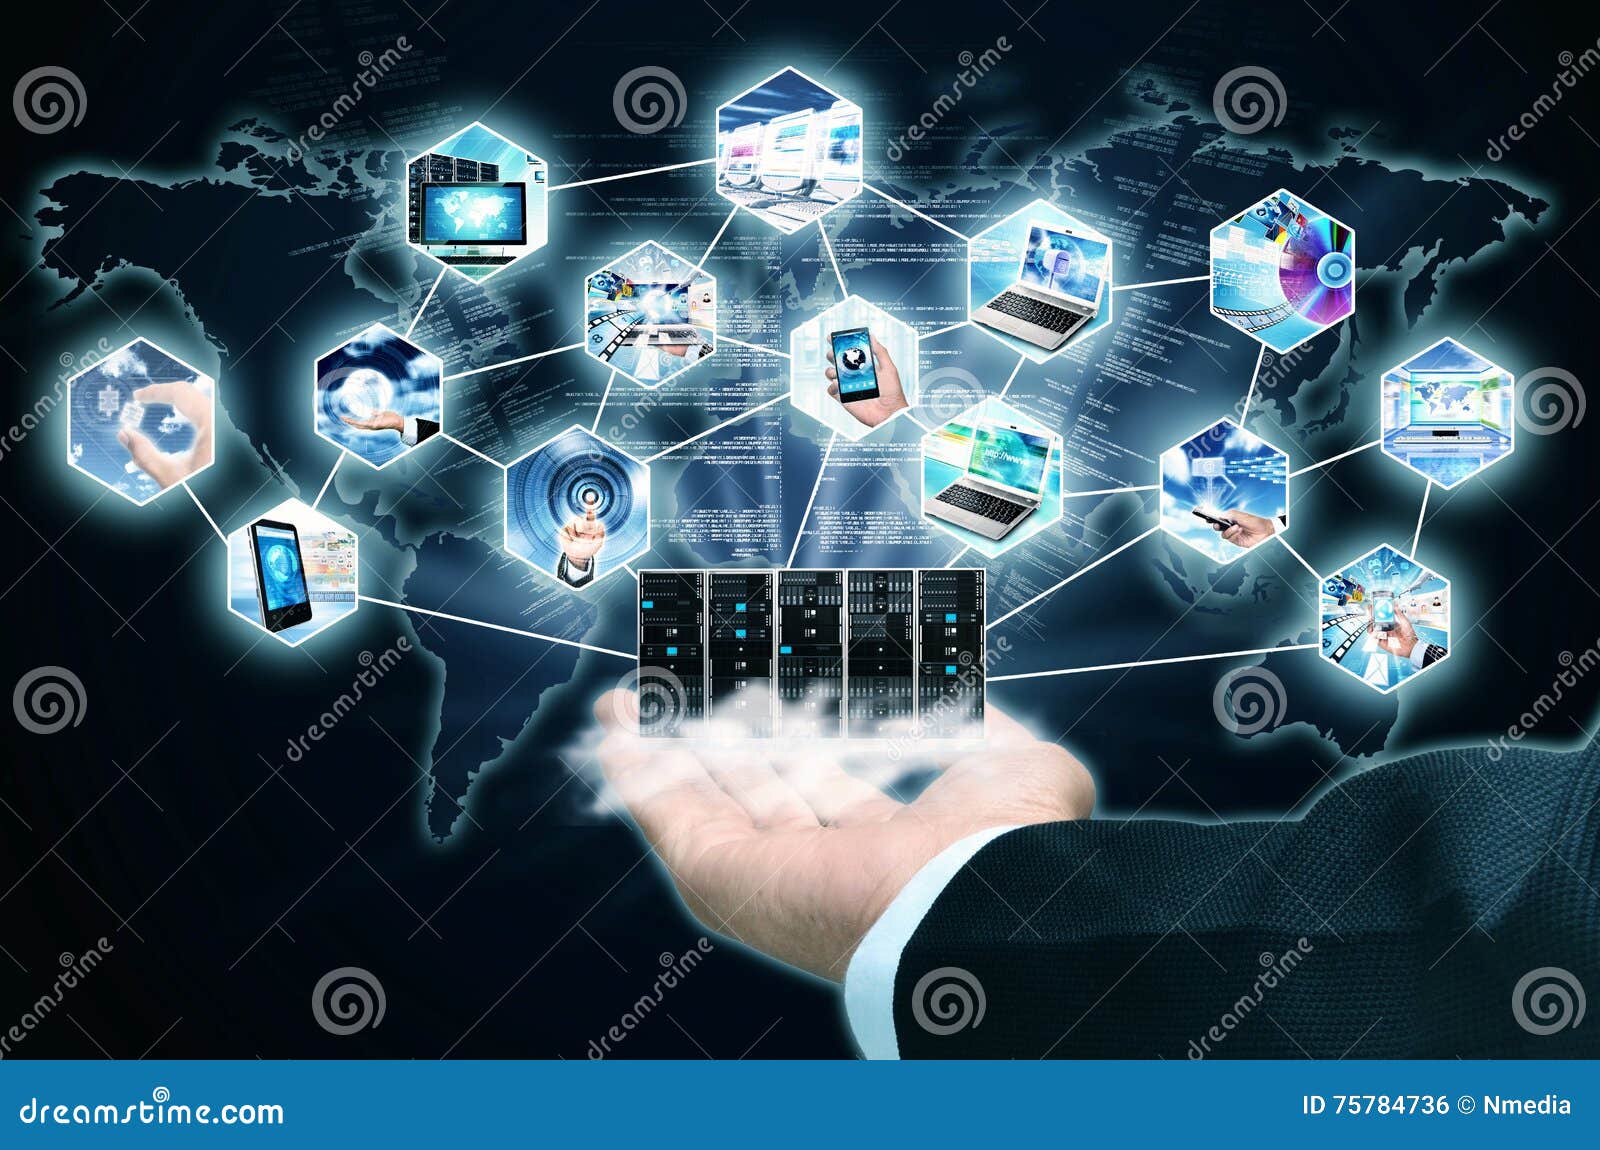 internet information technology